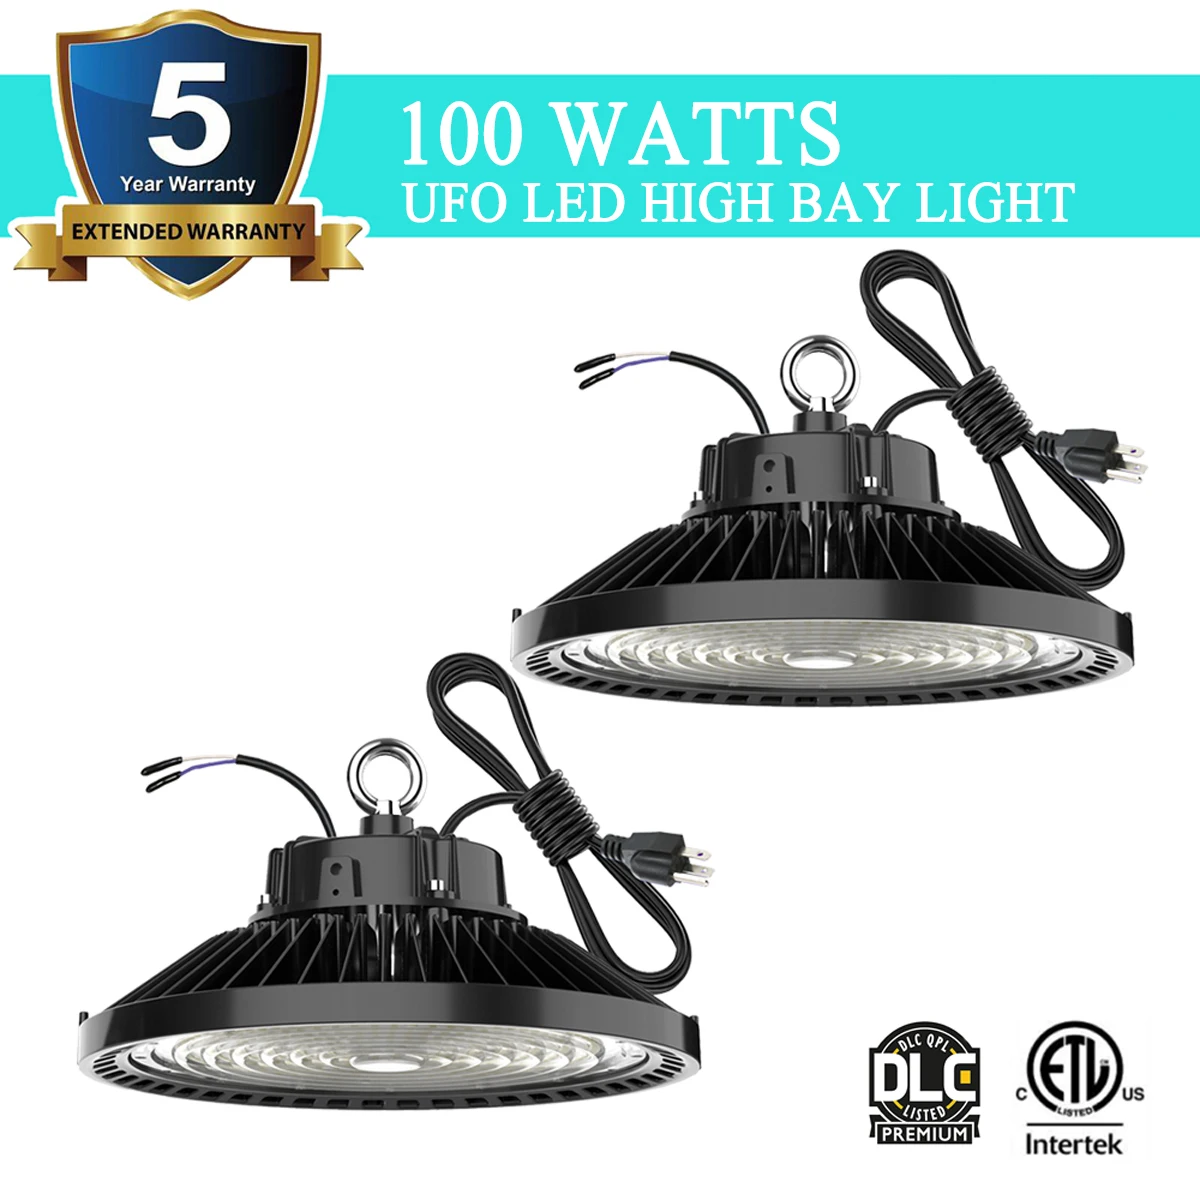 2Pack 100W UFO Led High Light 5000K, US STOCK, 1-10V Dimmable, Commercial Industrial Warehouse Workshop Light Fixture, 90-277V